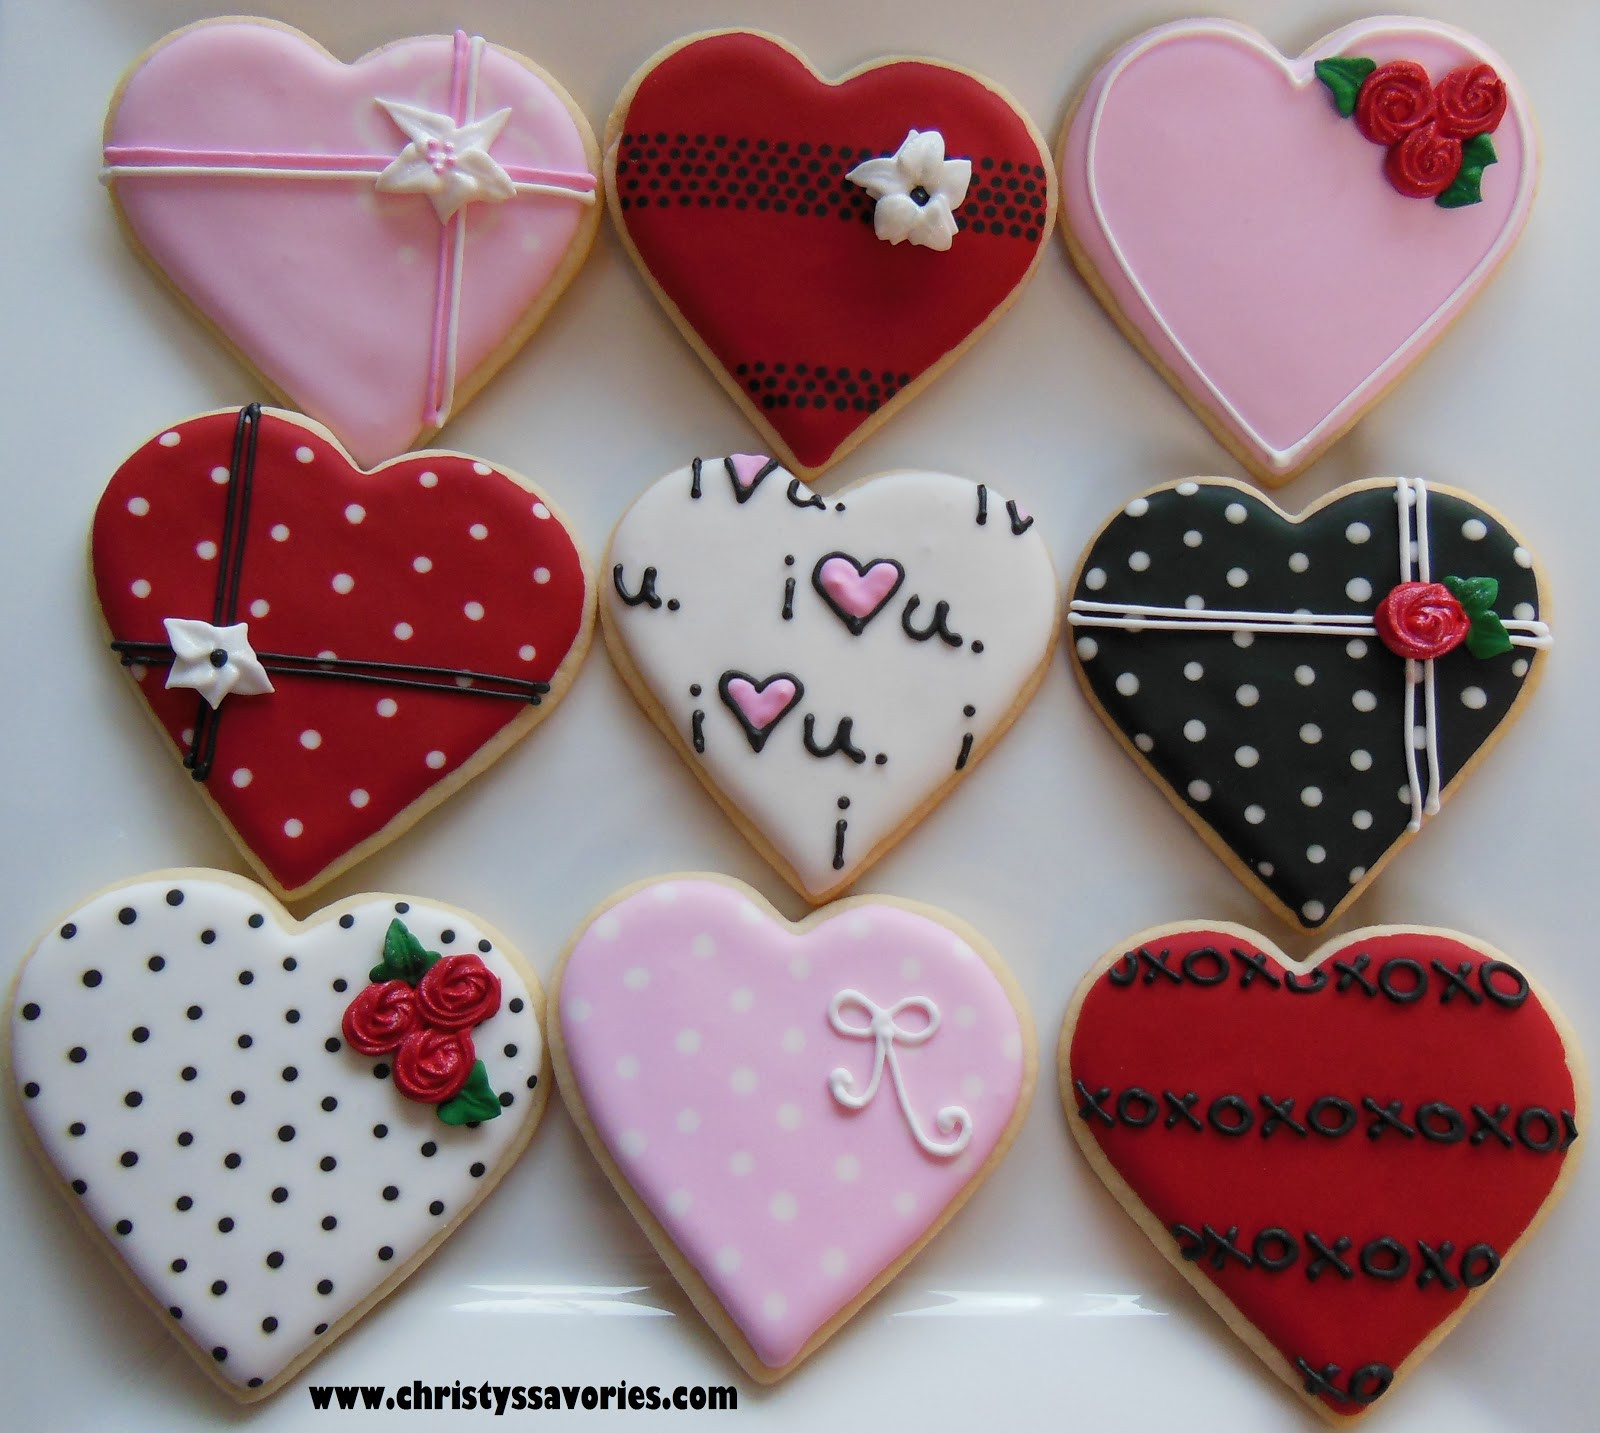 Valentine Sugar Cookies Decorating Ideas
 Christy s Savories Valentine s Day Heart Cookies